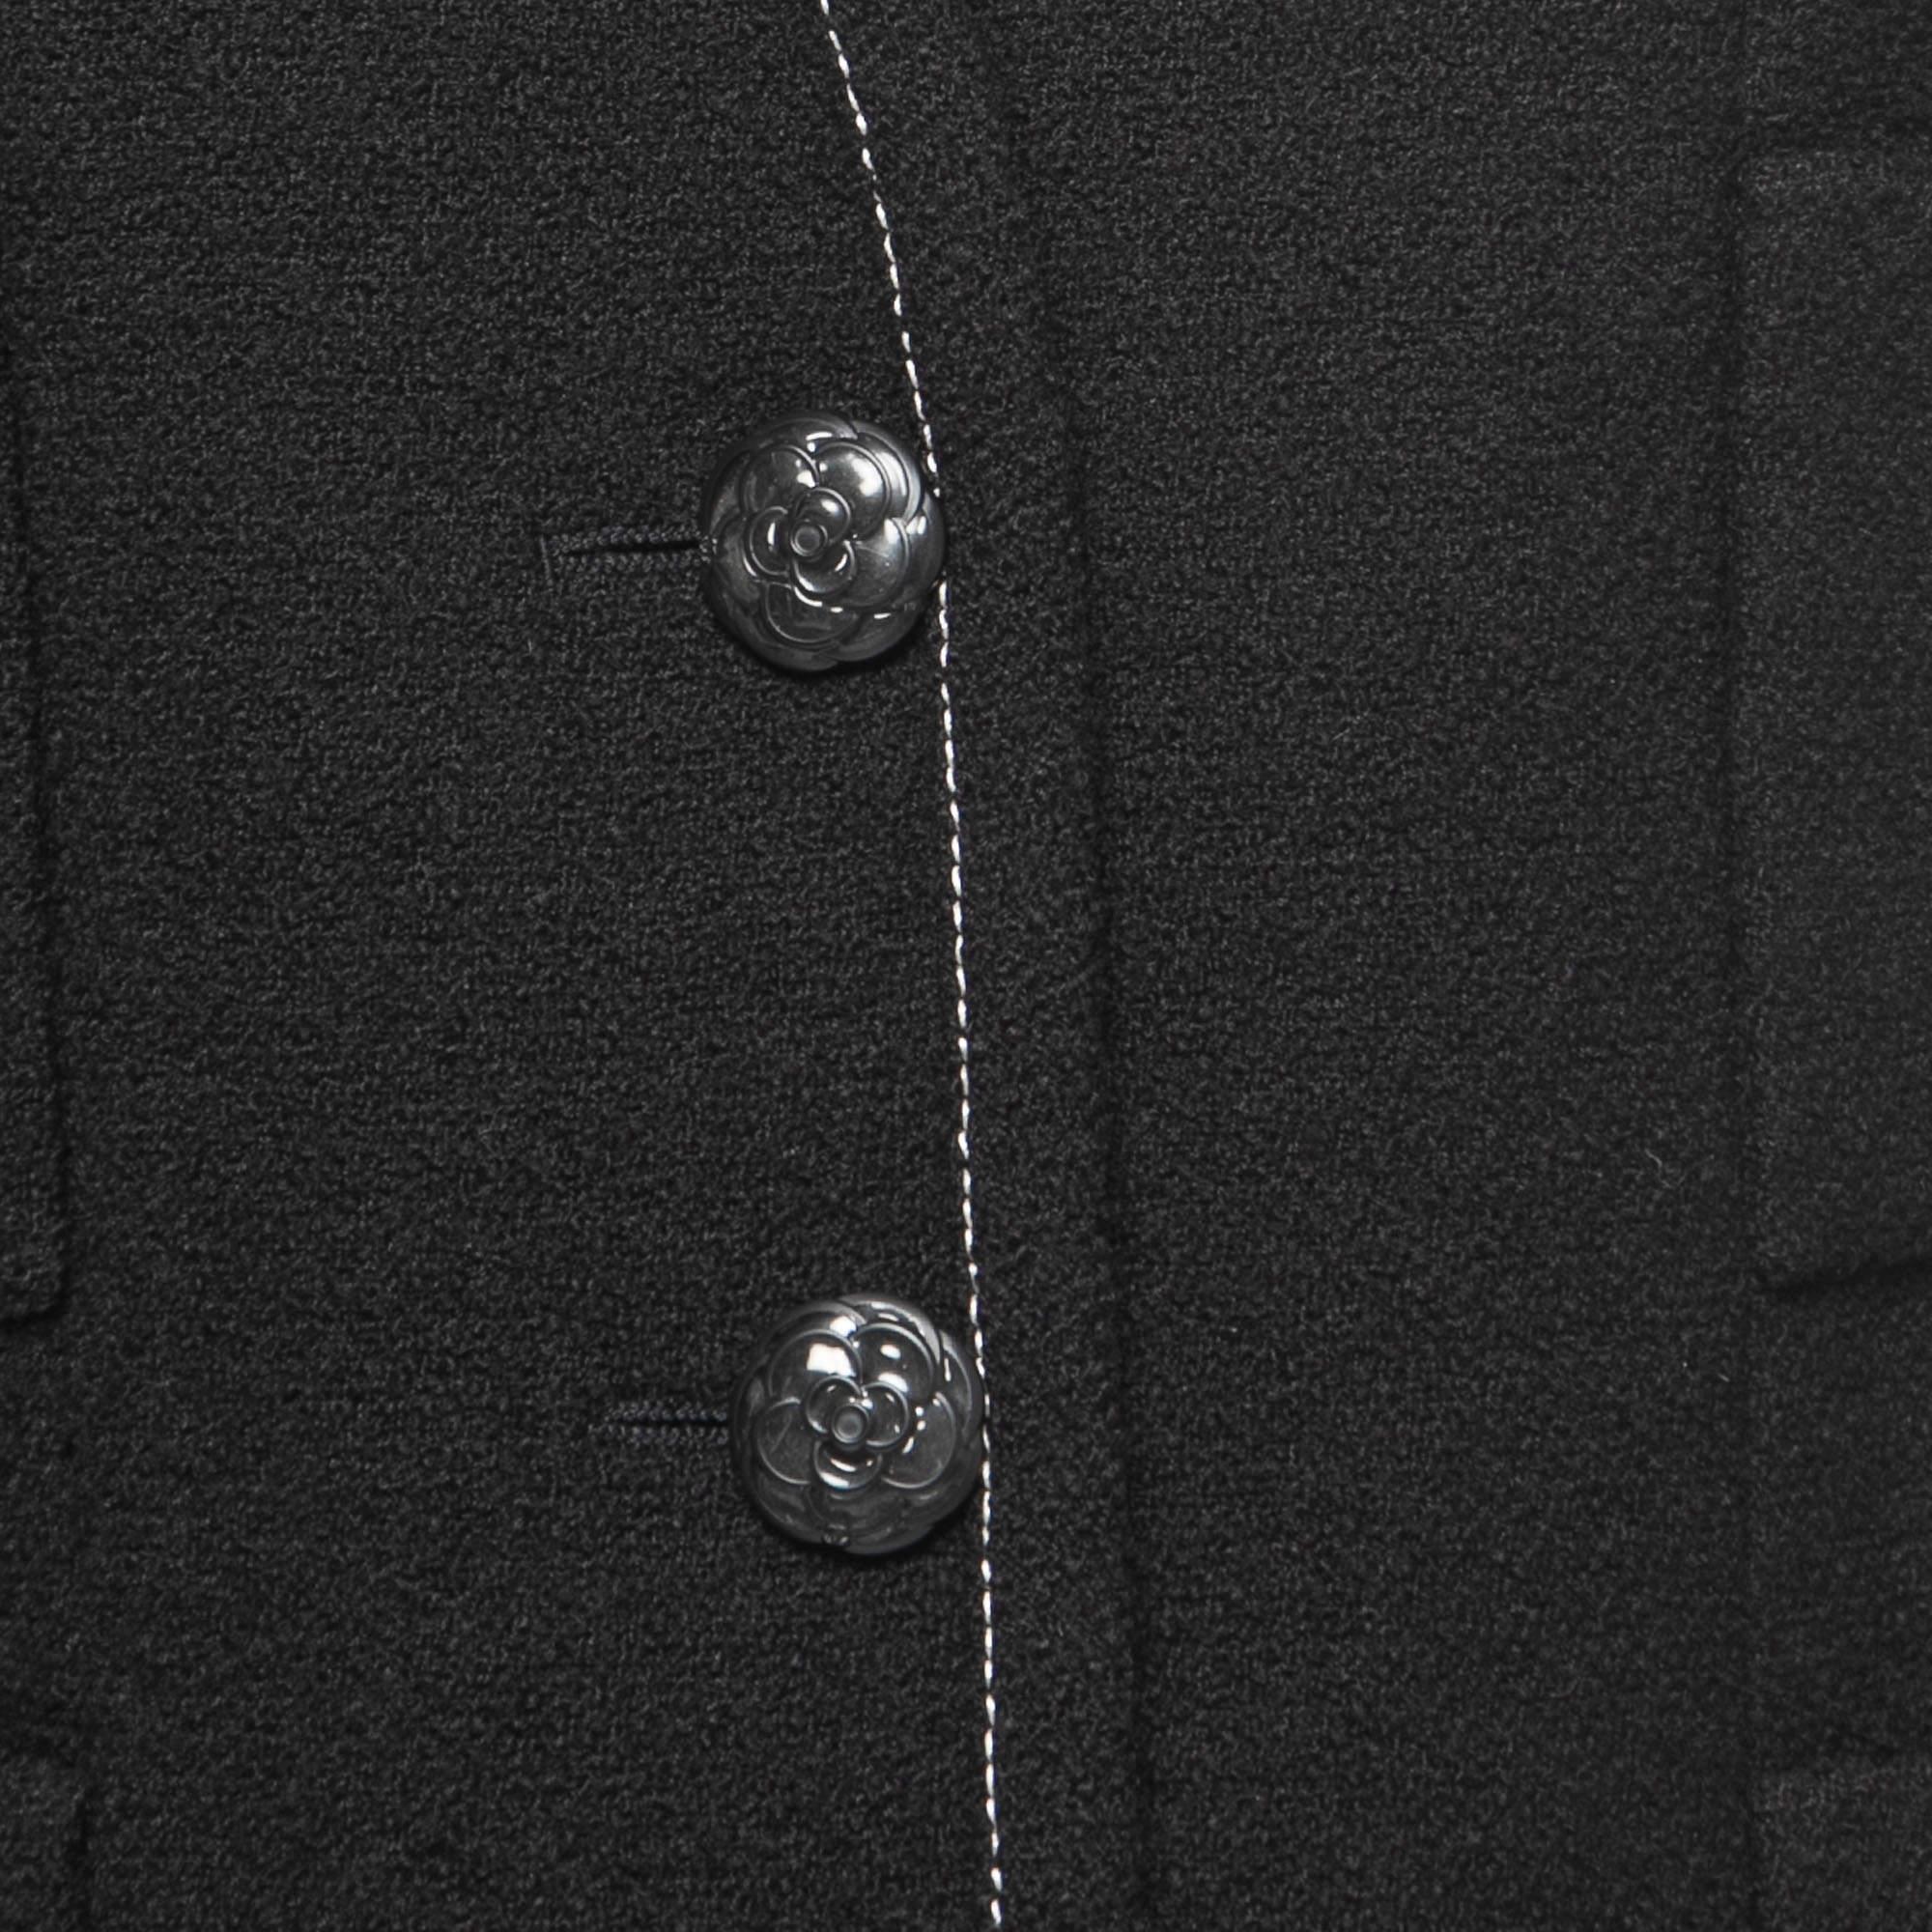 Chanel Coco Brasserie Vogue Cover Black Tweed Jacket 5